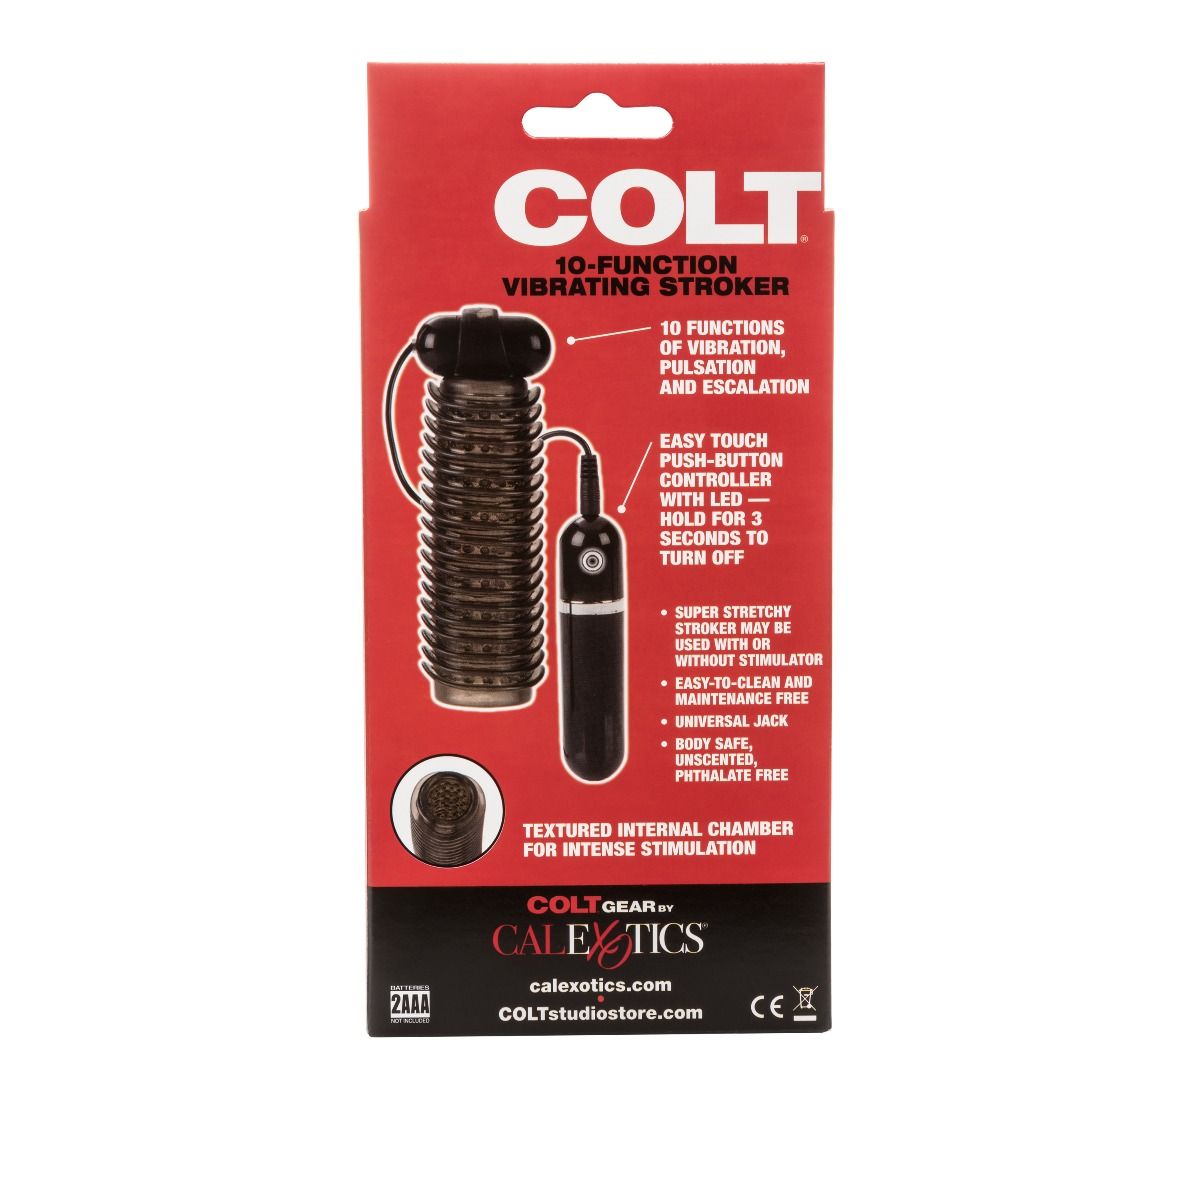 COLT 10 Function Vibrating Stroker - Smoke